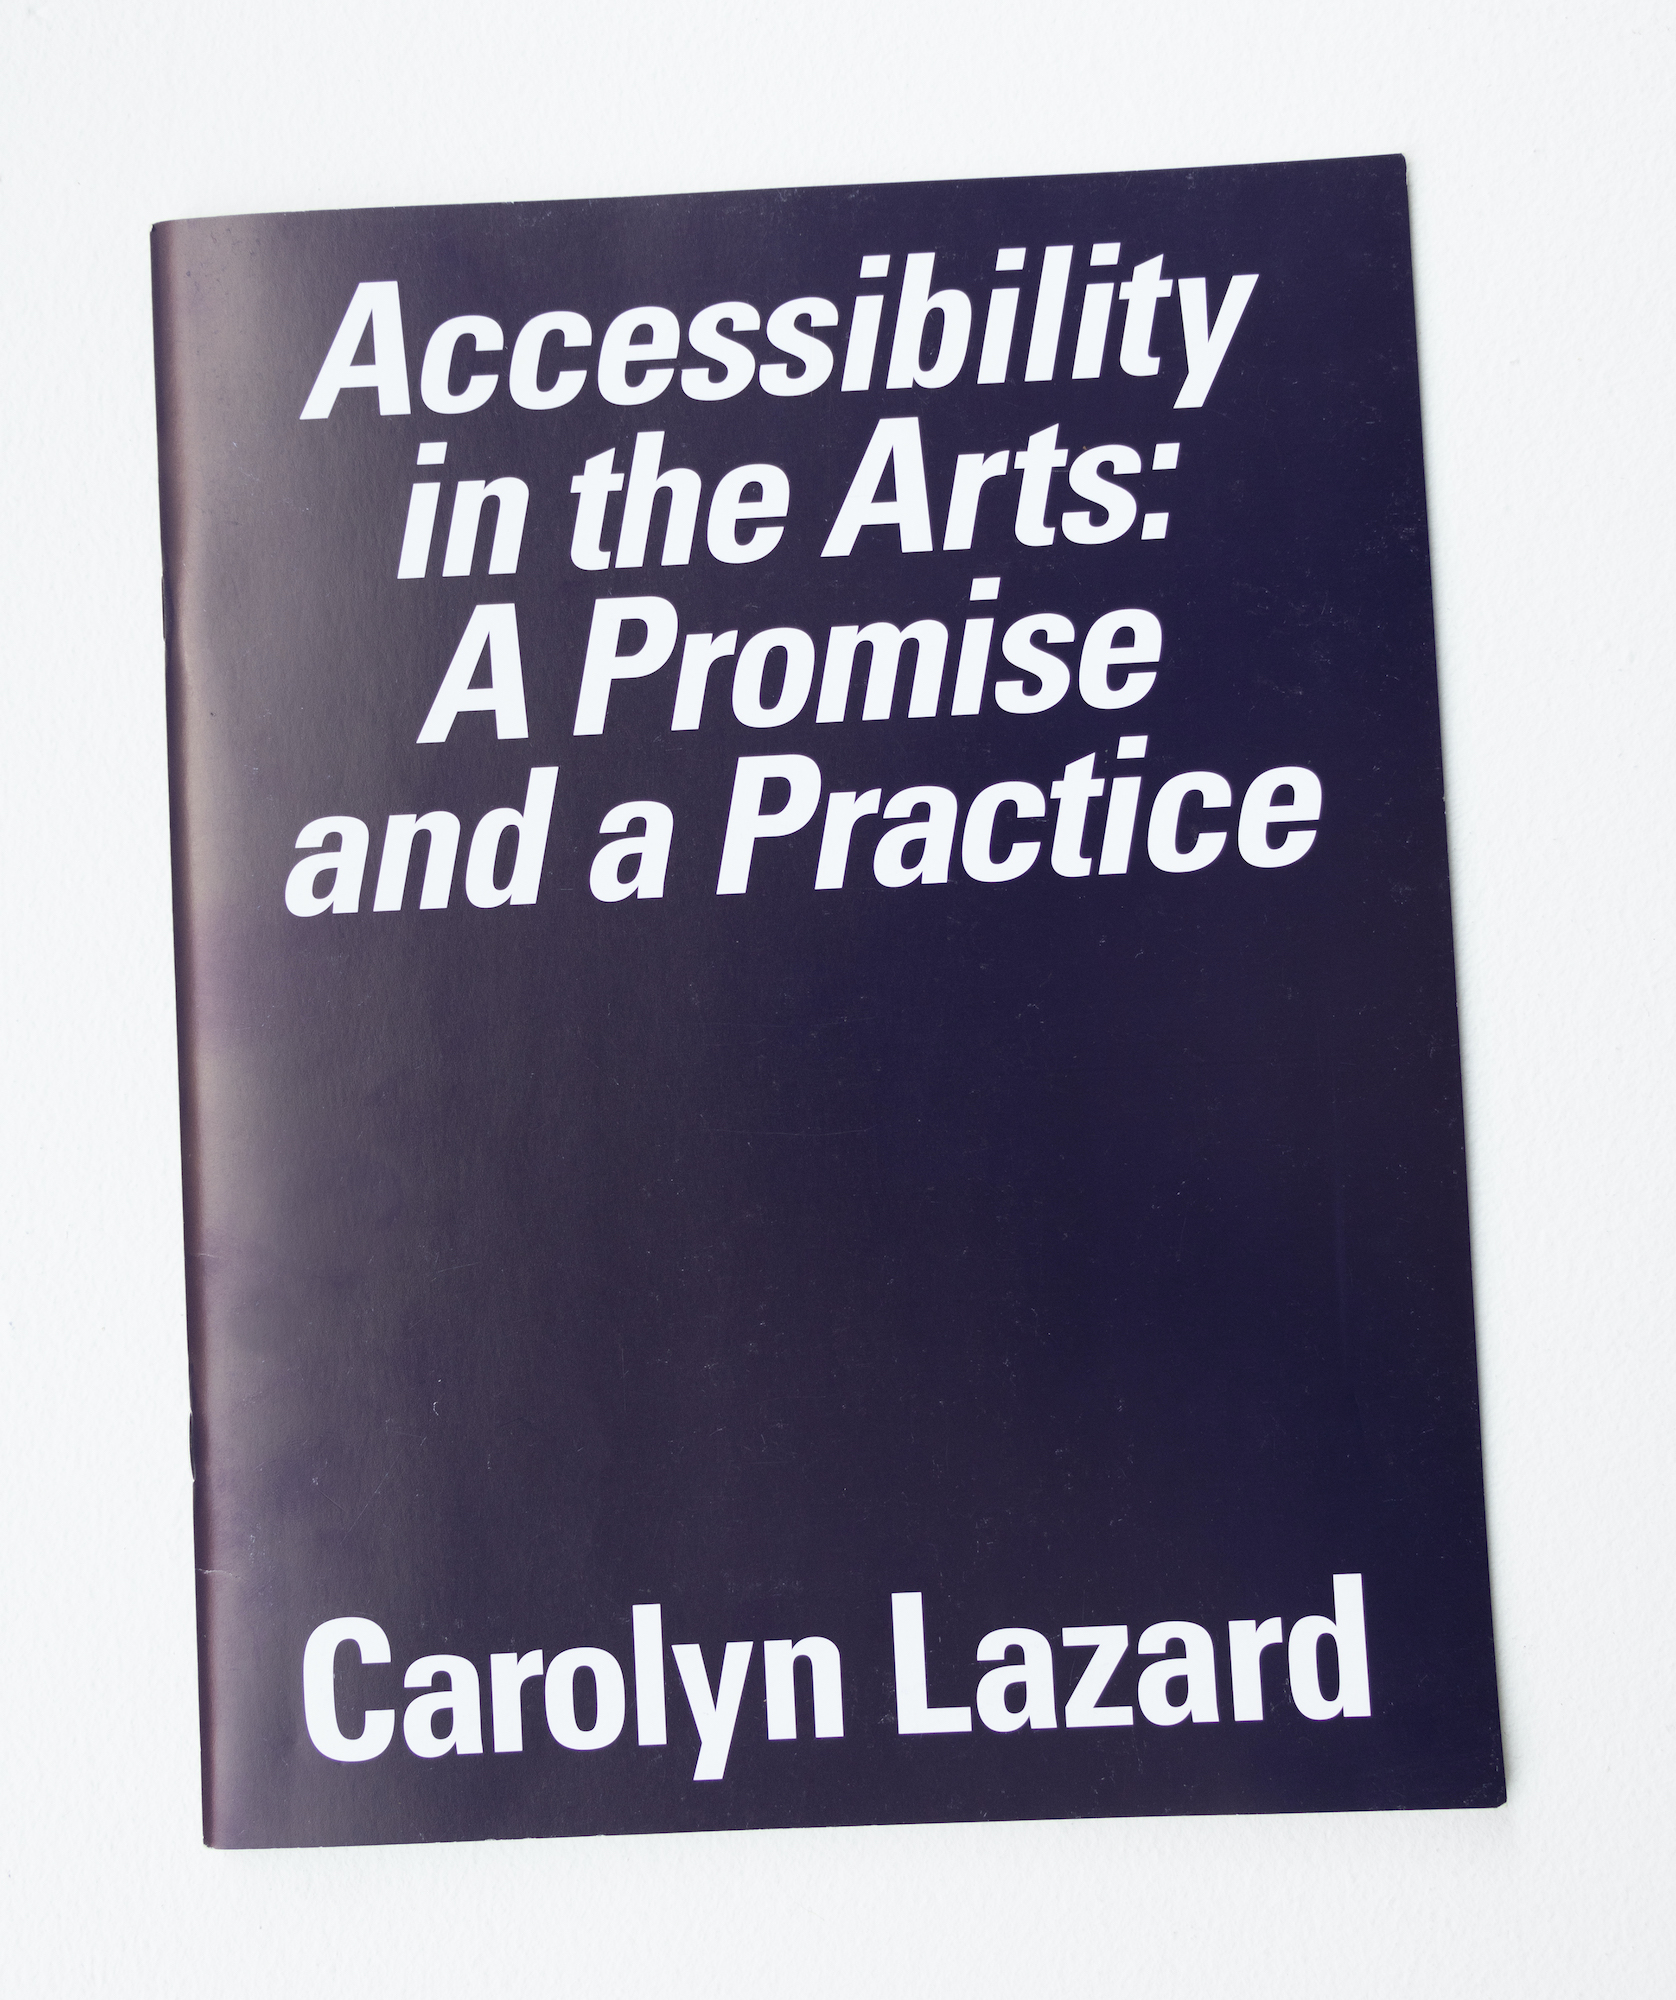 An image of Carolyn Lazard's book 